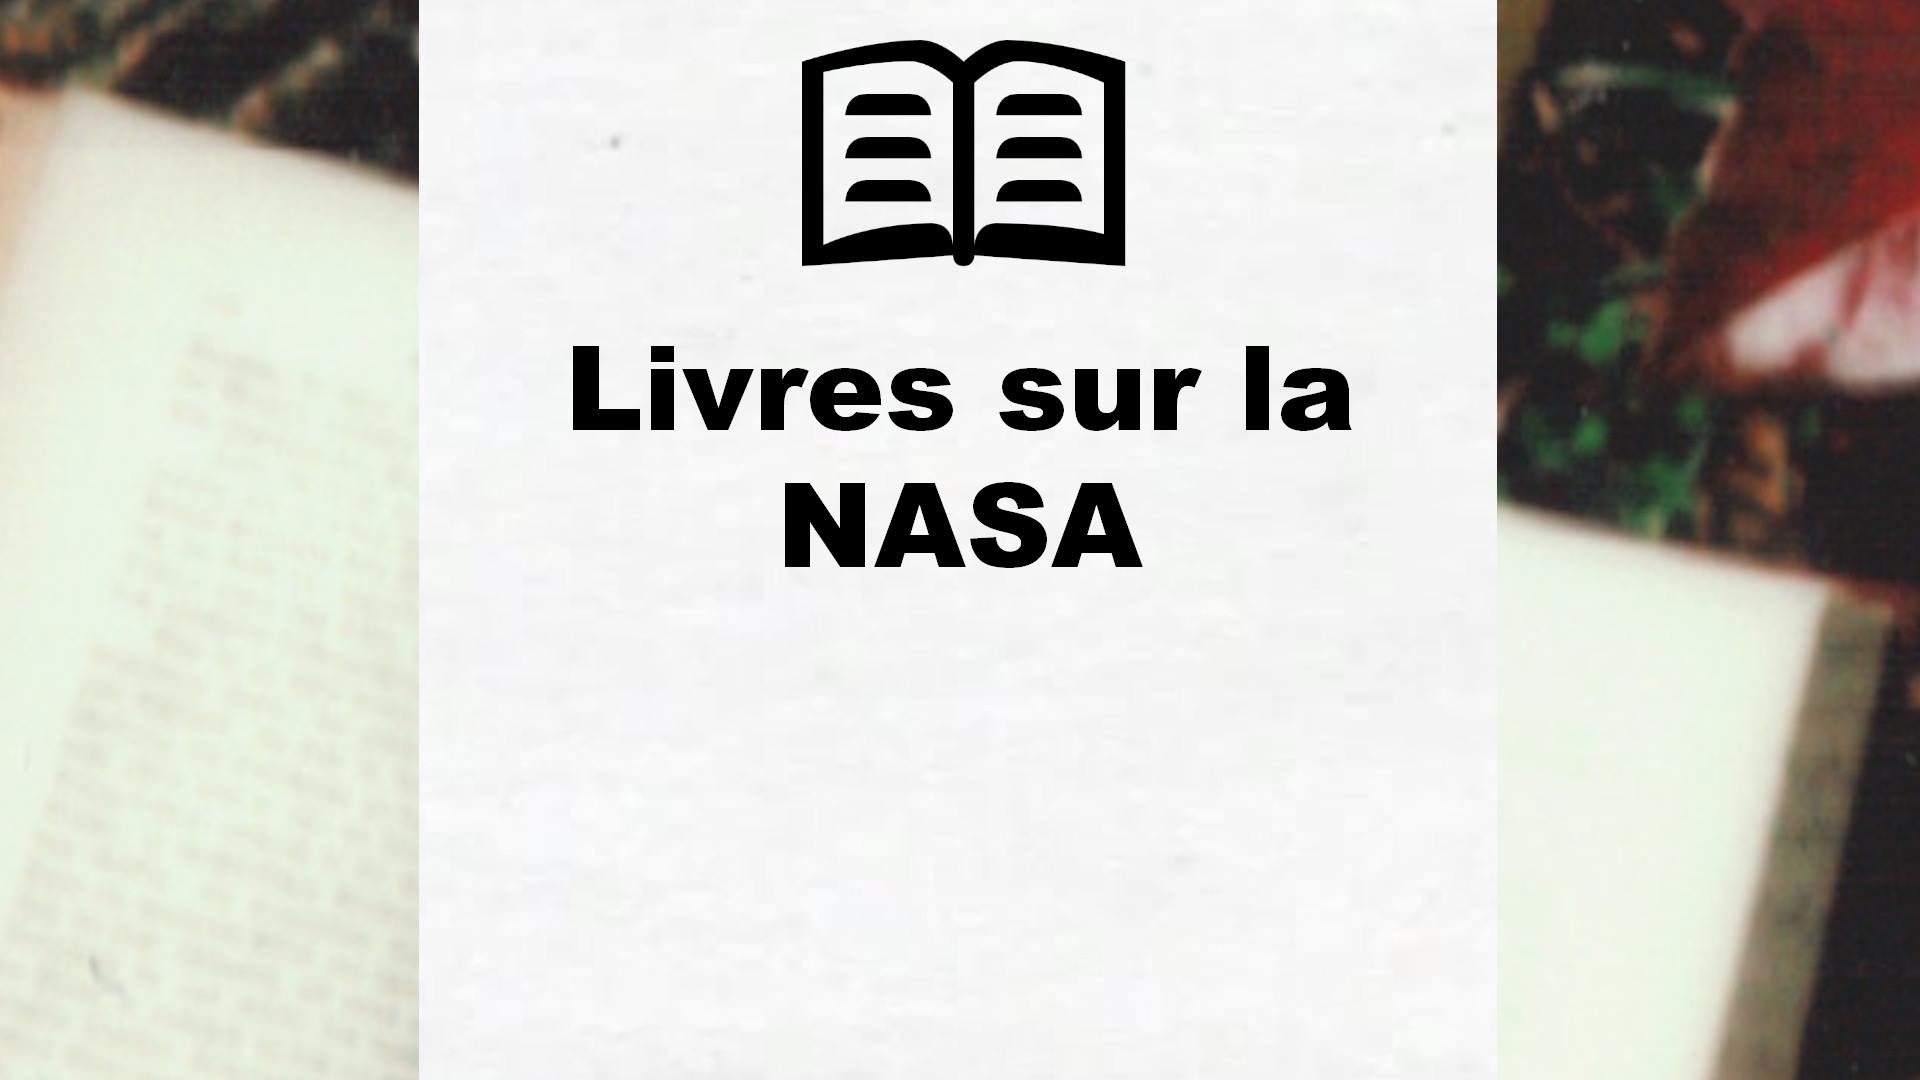 Livres sur la NASA